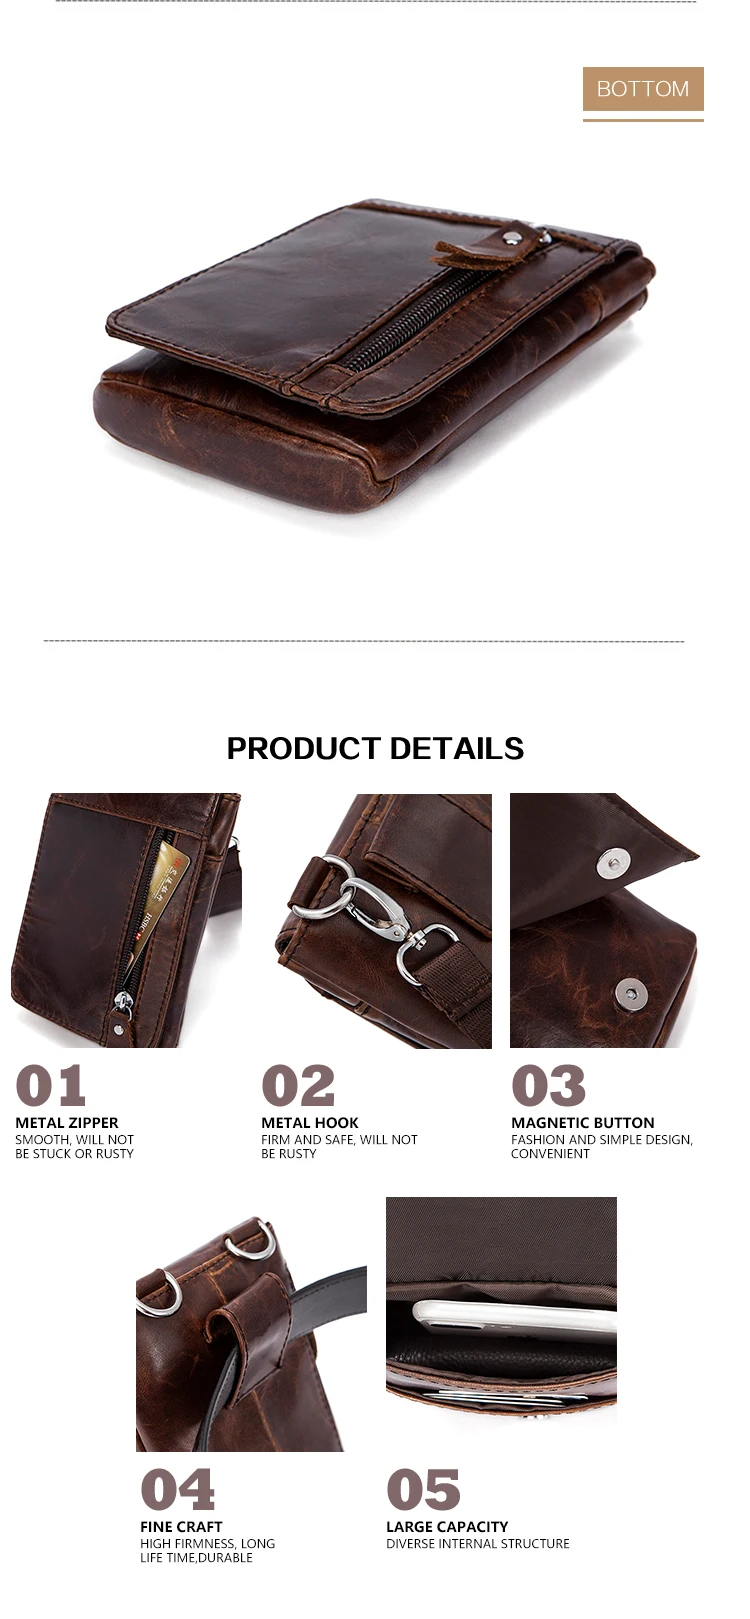 Gift for men, fathers, dad, daddy, Genuine Leather Belt Bag (for Phone / wallet / keys / passport)